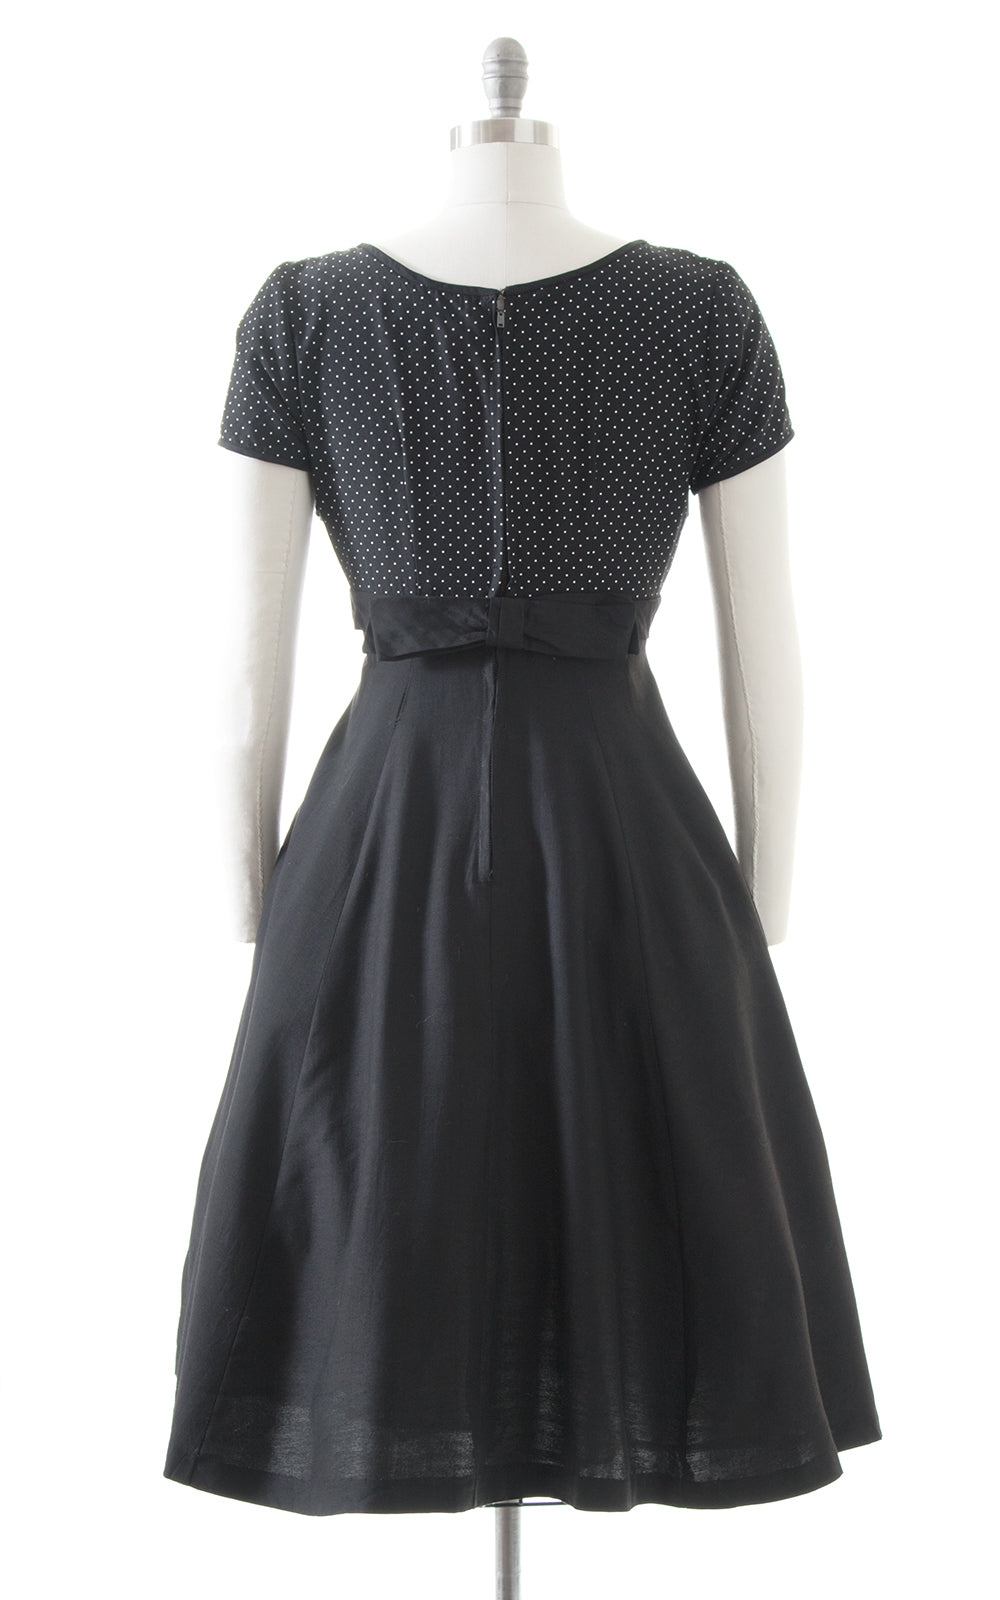 1950s Polka Dot Black Swing Dress